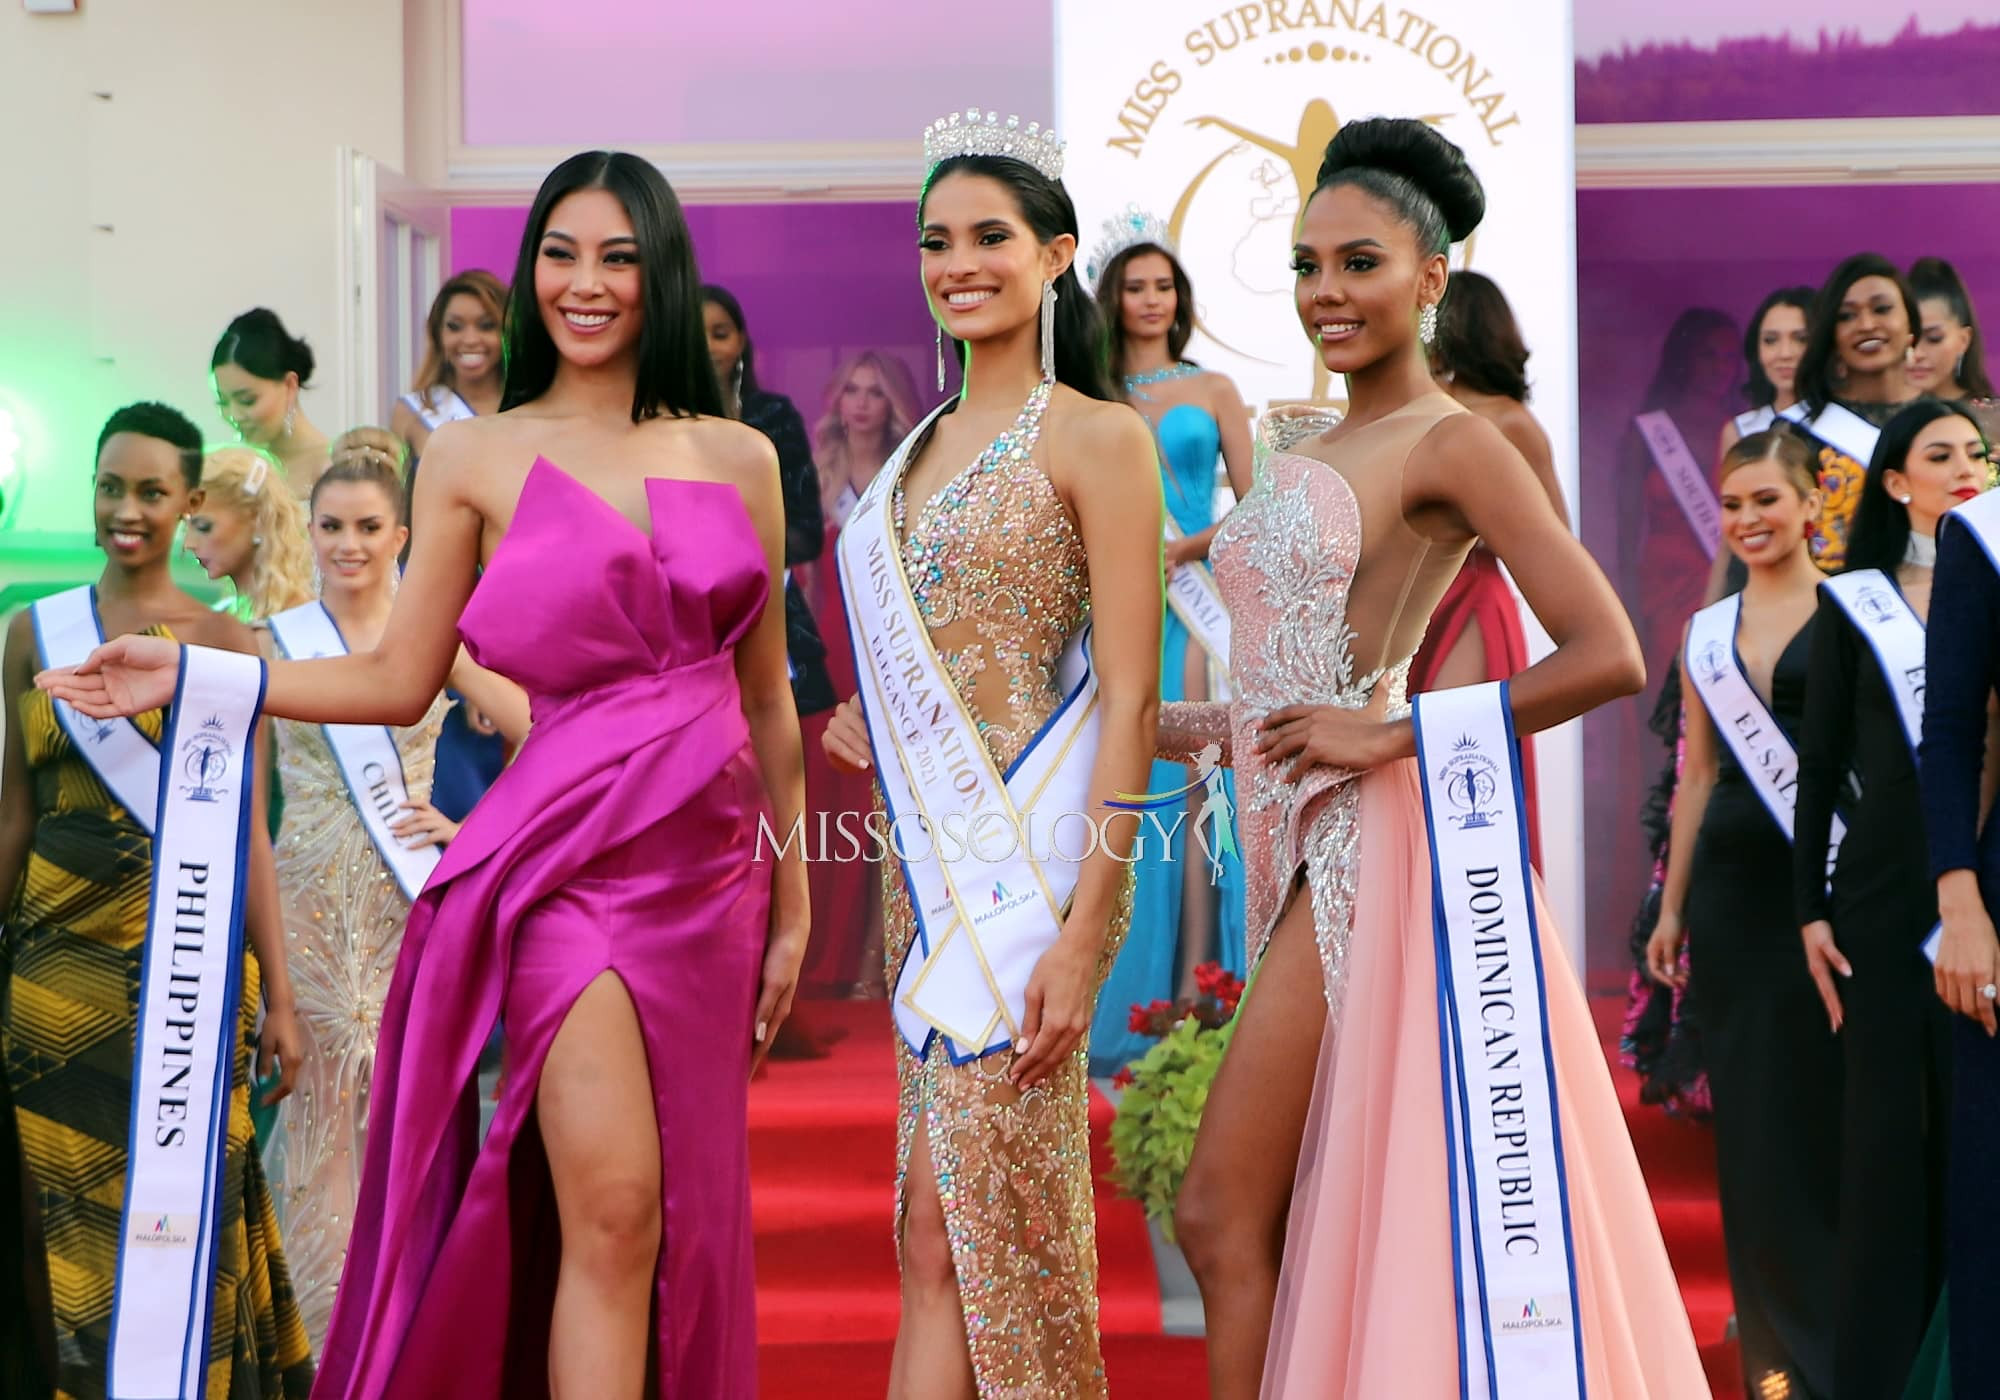 miss elegance de miss supranational 2021: miss puerto rico. RRapun